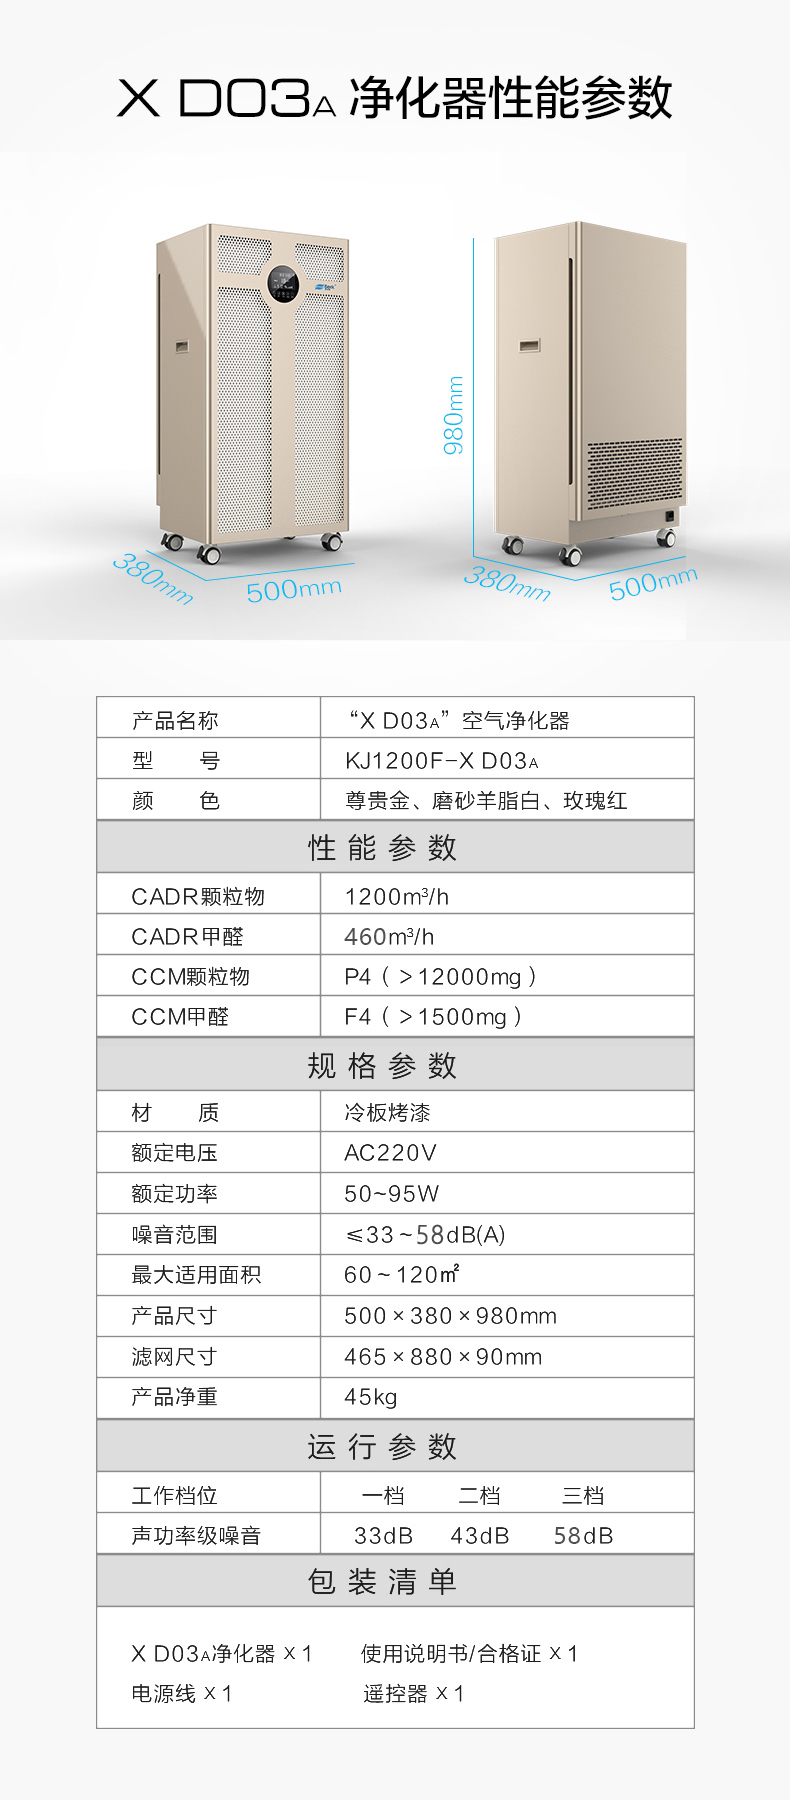 XDO3A智能空气净化器